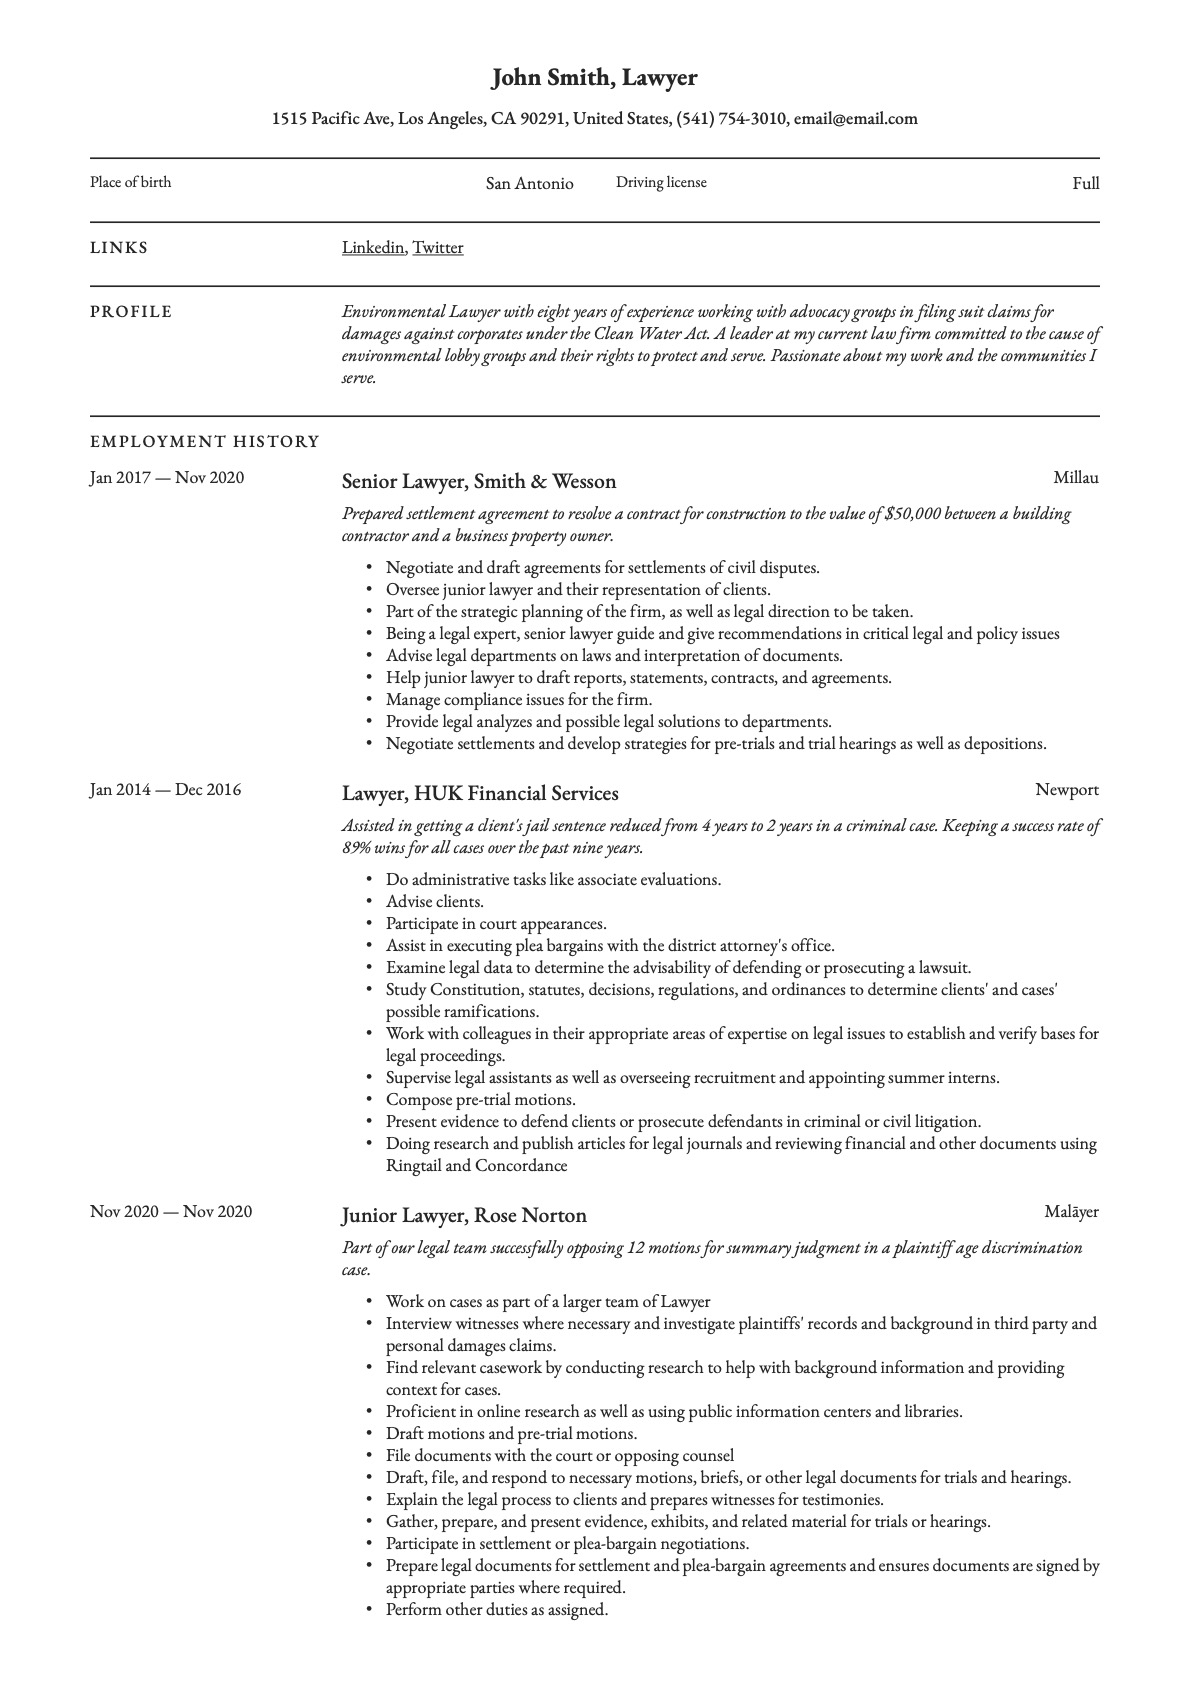 Example resume Lawyer-5